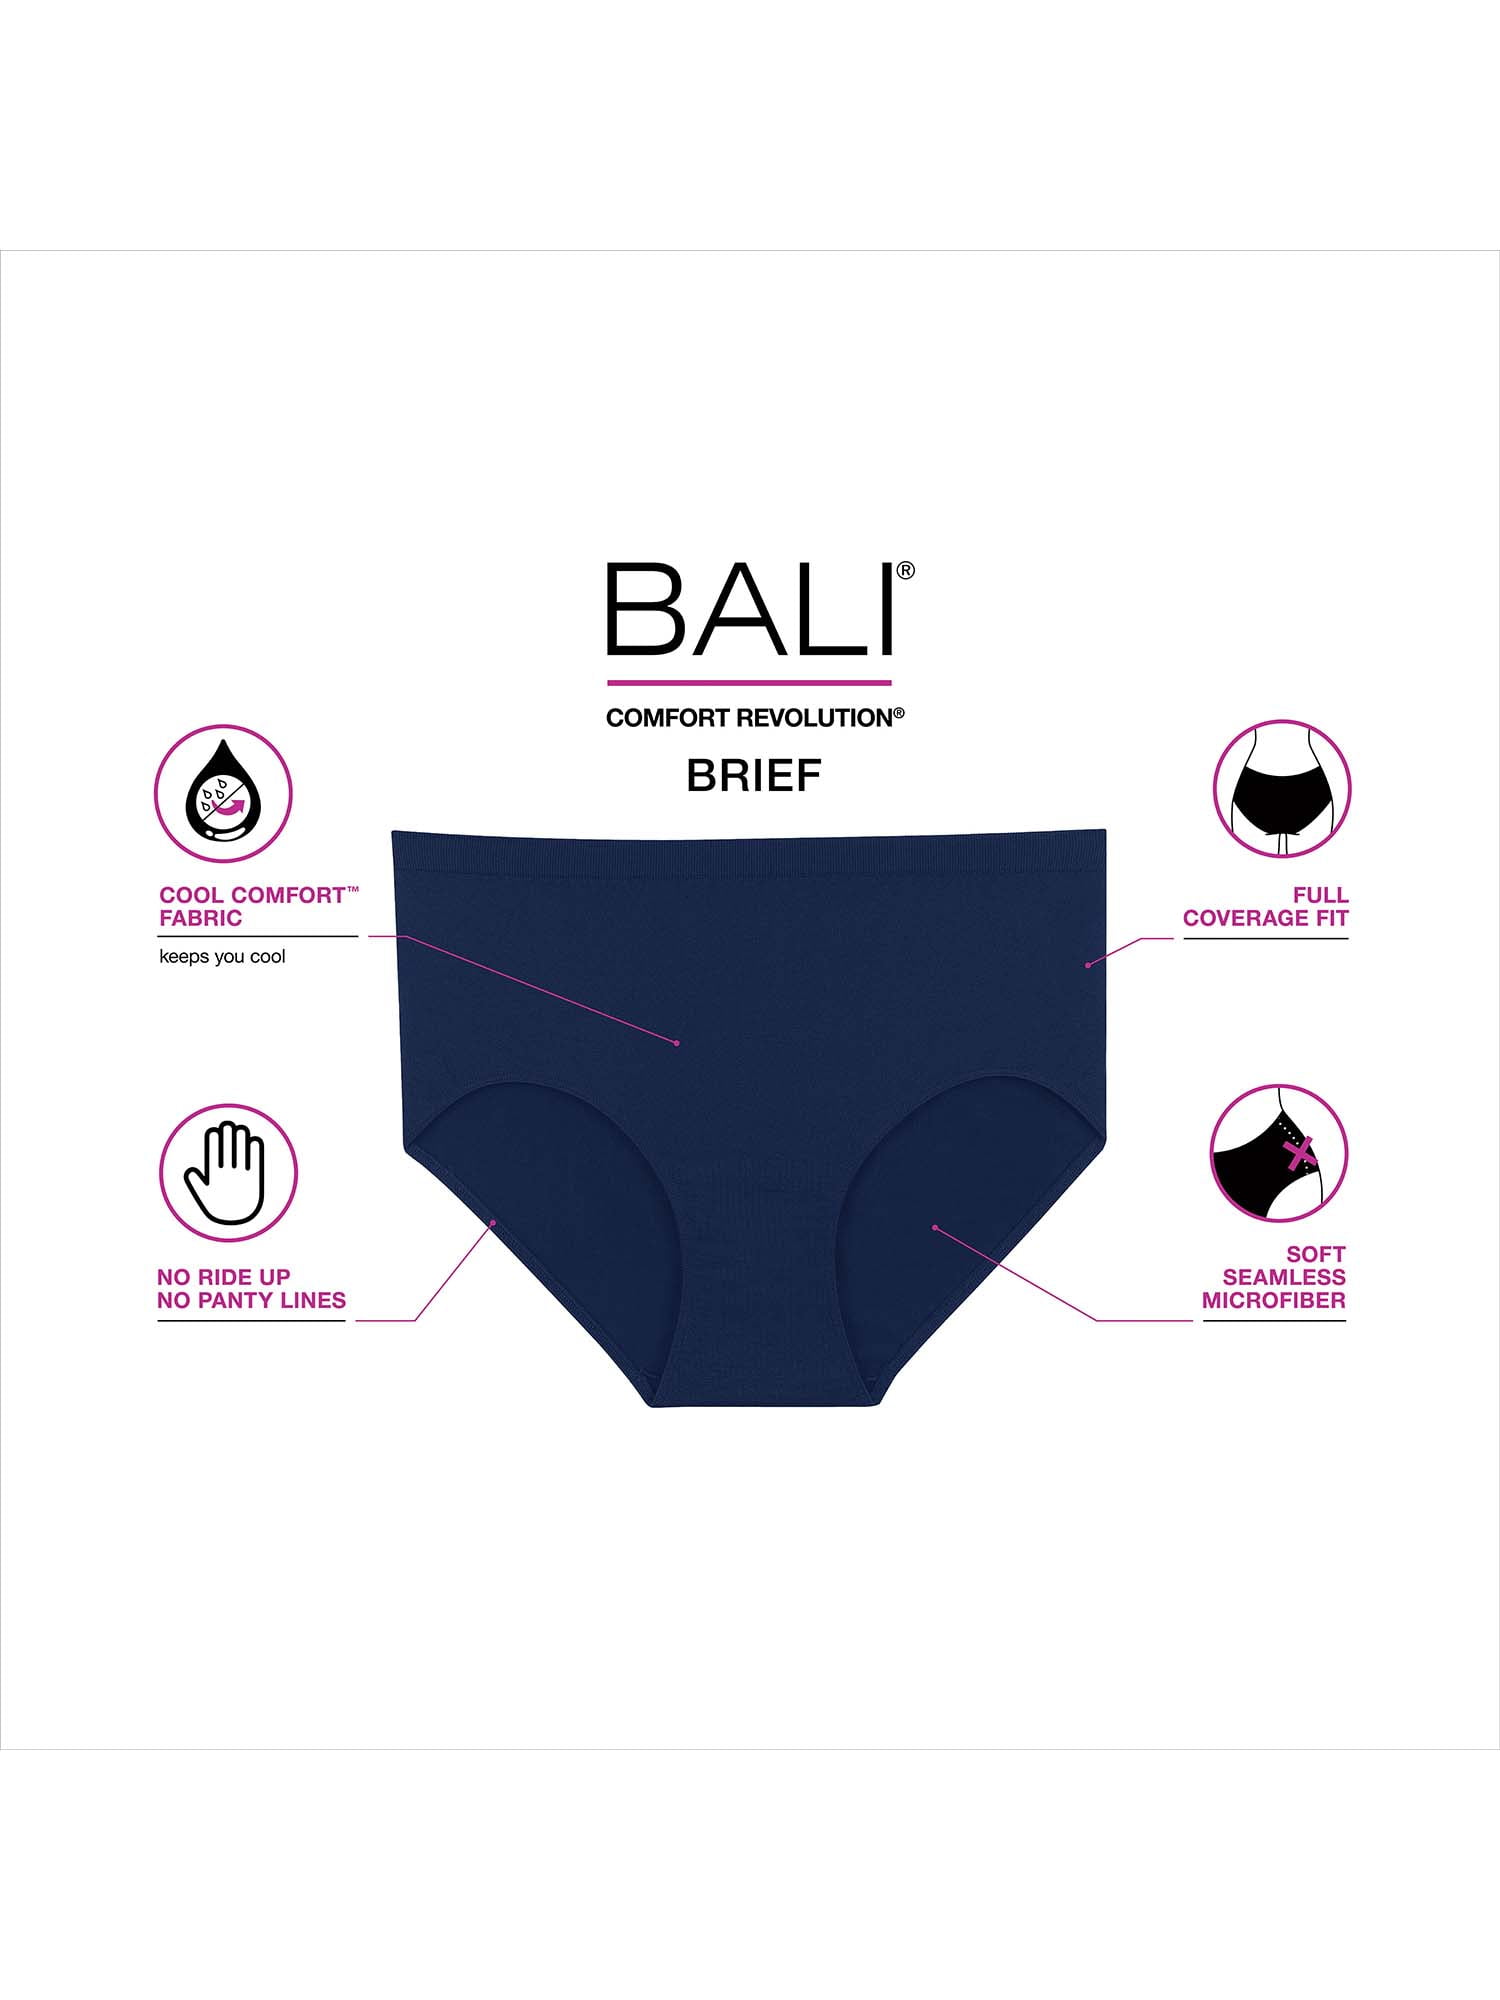 Bali Comfort Revolution Microfiber Brief, 3-Pack Nude/Light Beige/Nude  w/White Dot 8/9 Women's 